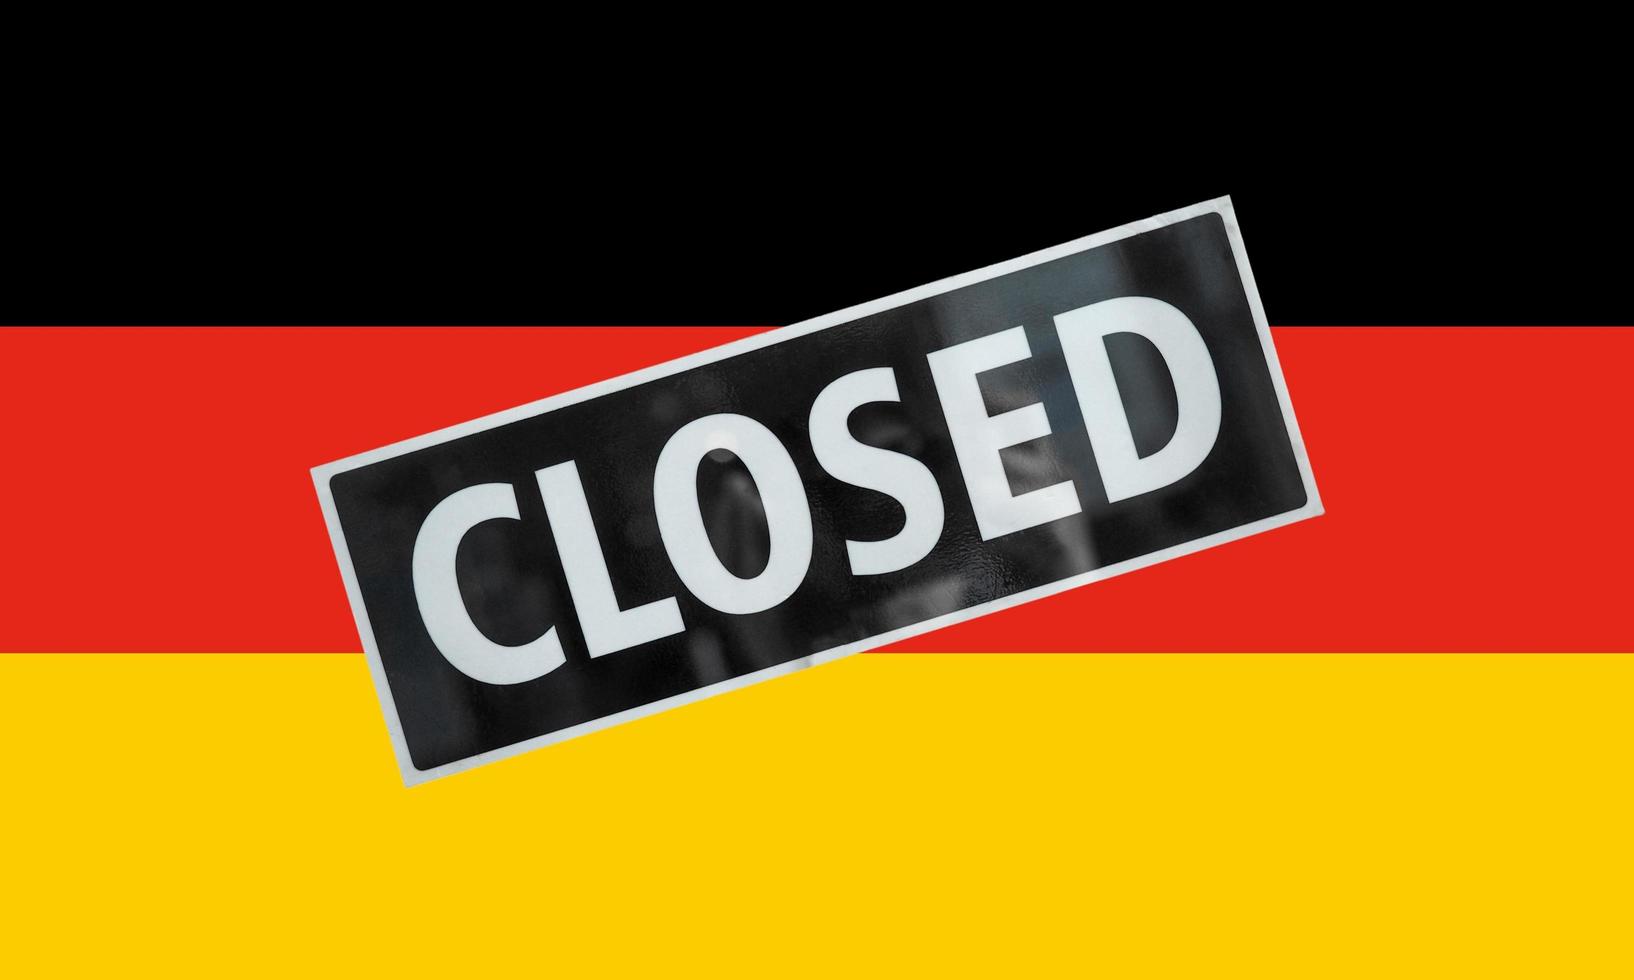 bandiera tedesca della germania con cartello chiuso foto